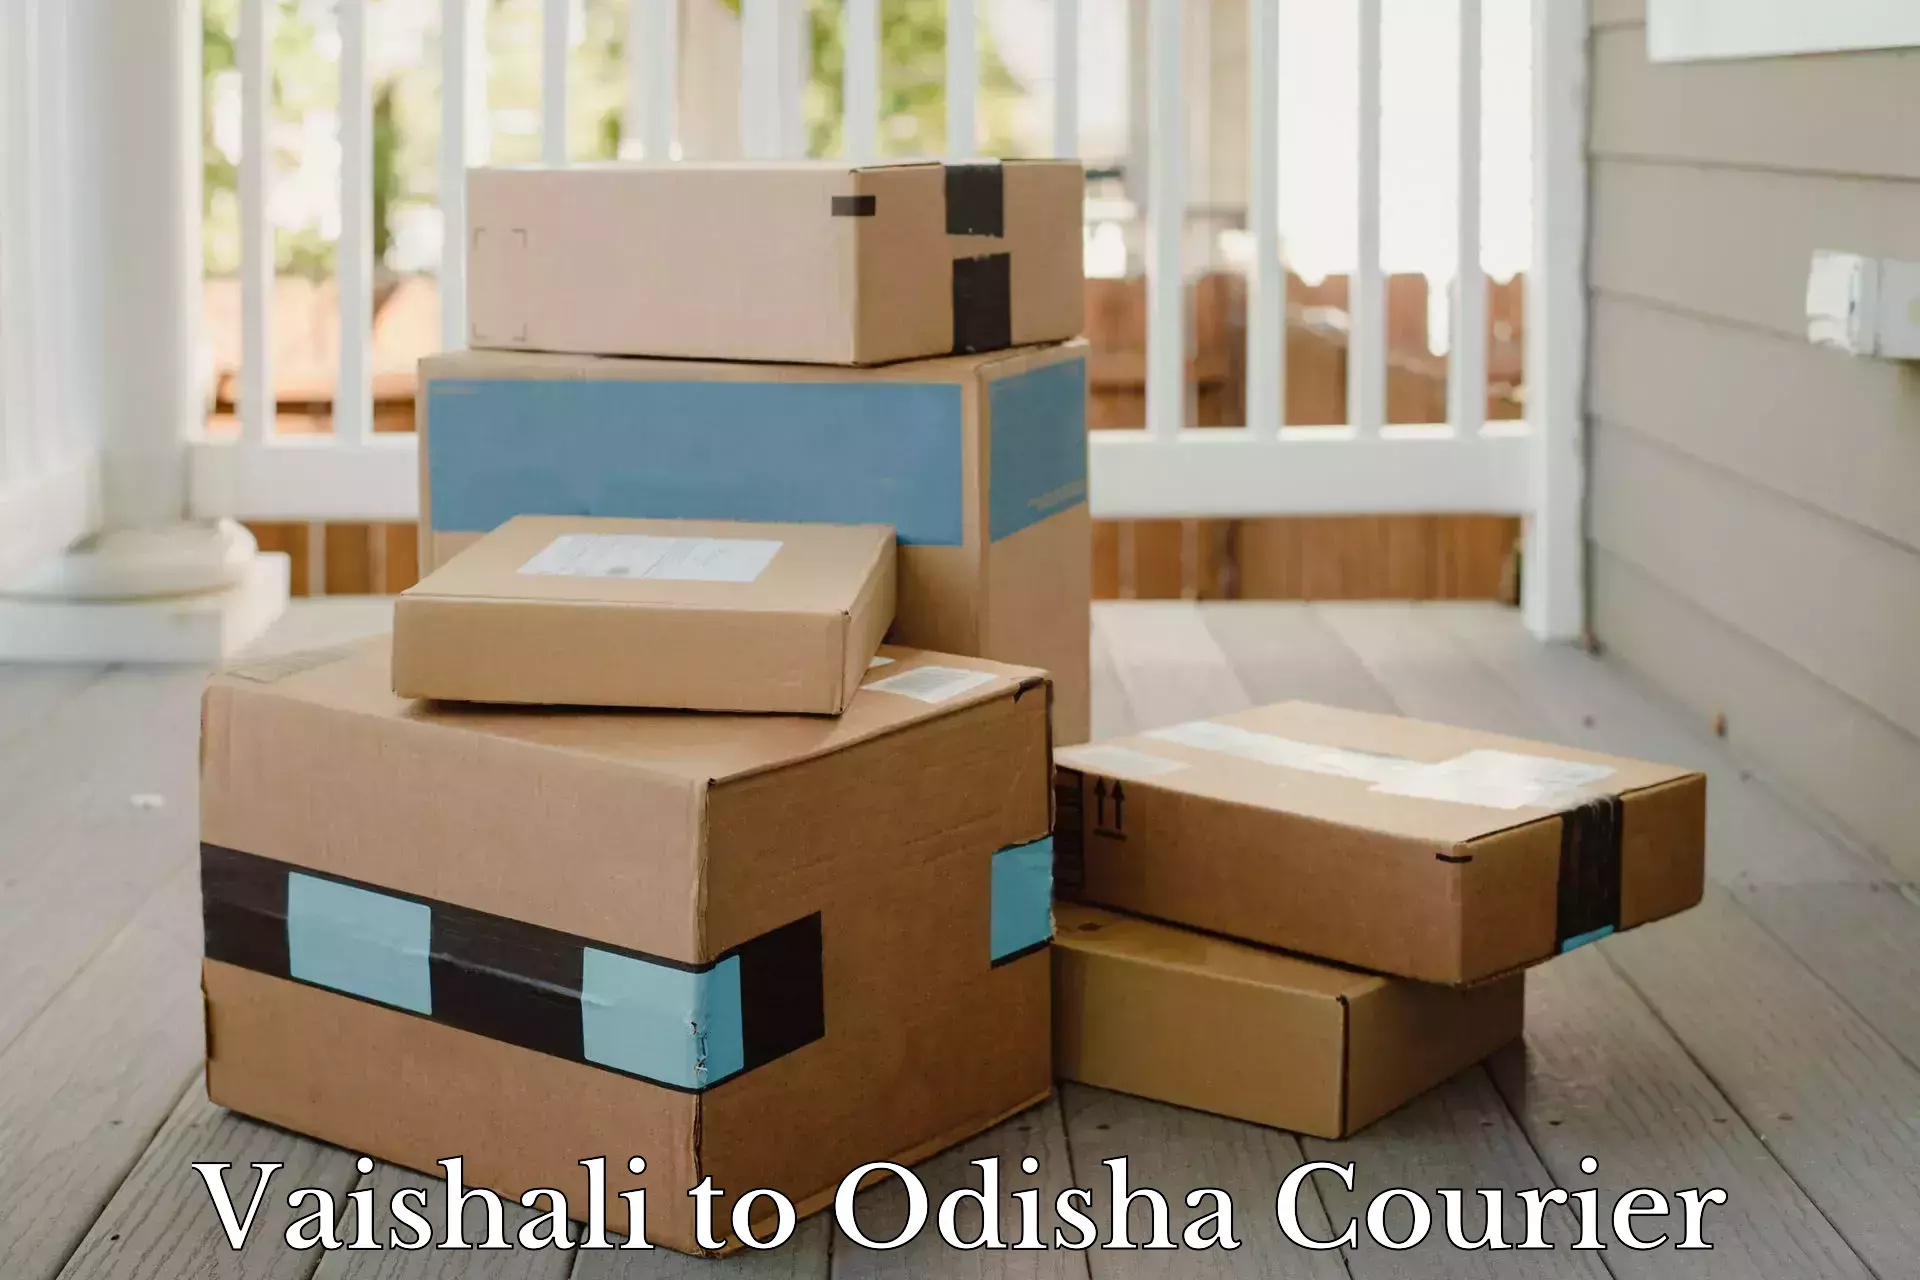 Efficient order fulfillment Vaishali to Bonth